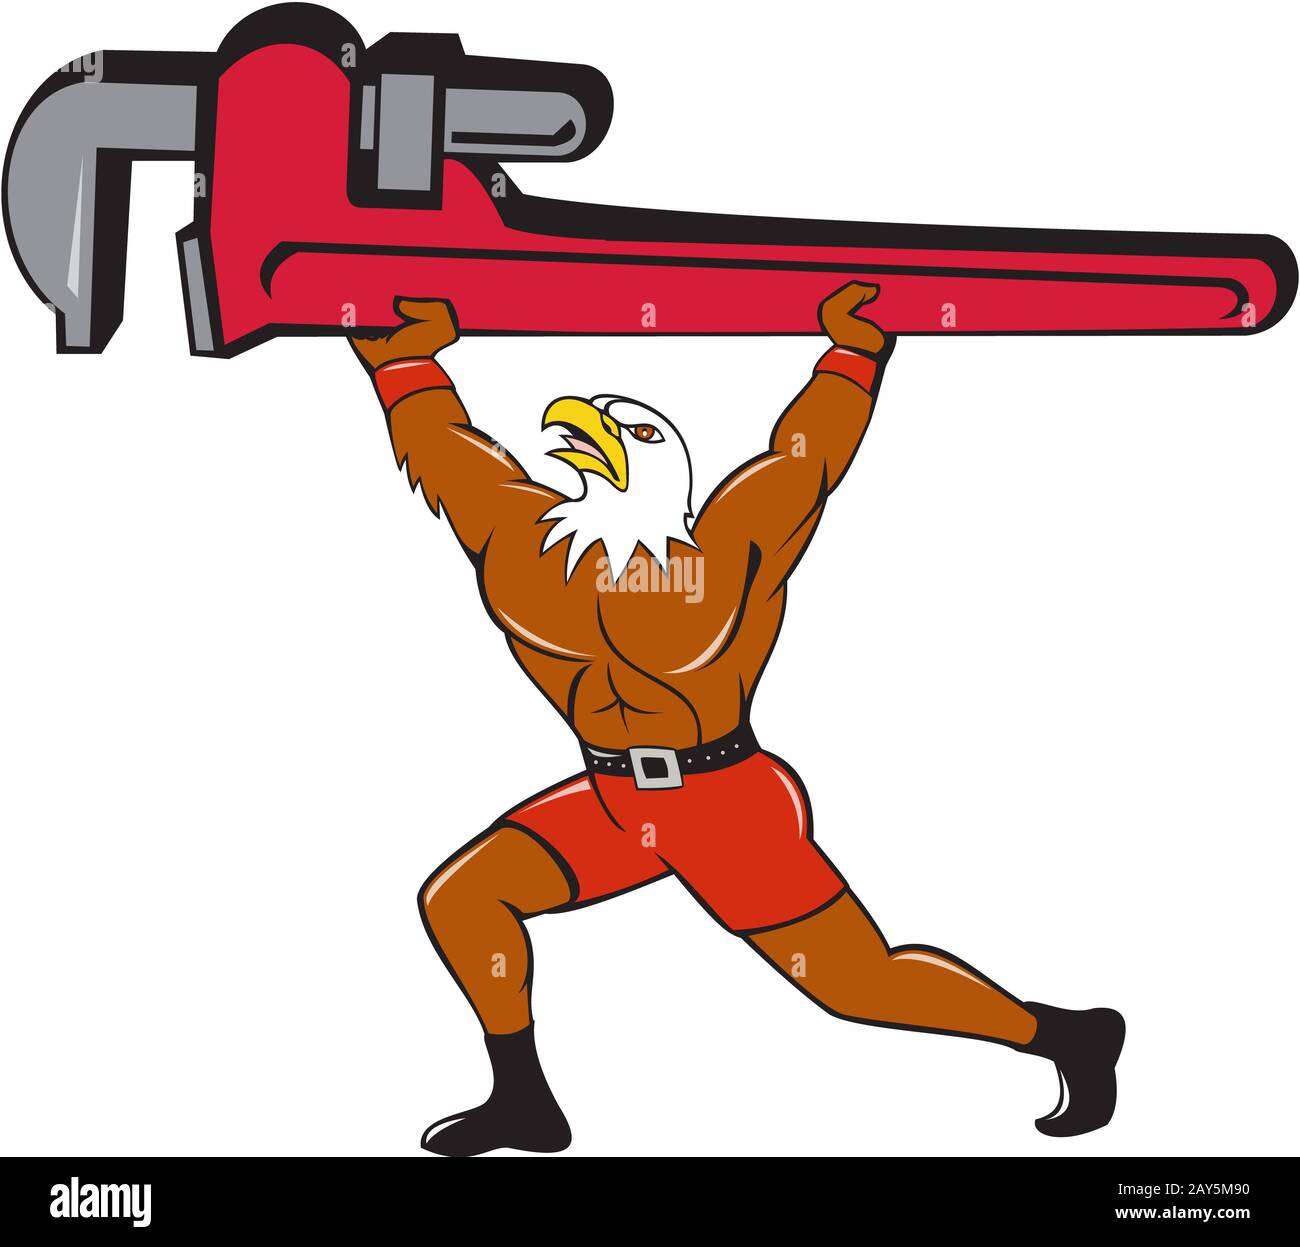 Bald Eagle Plumber Monkey Wrench Isolated Cartoon Stock Photo